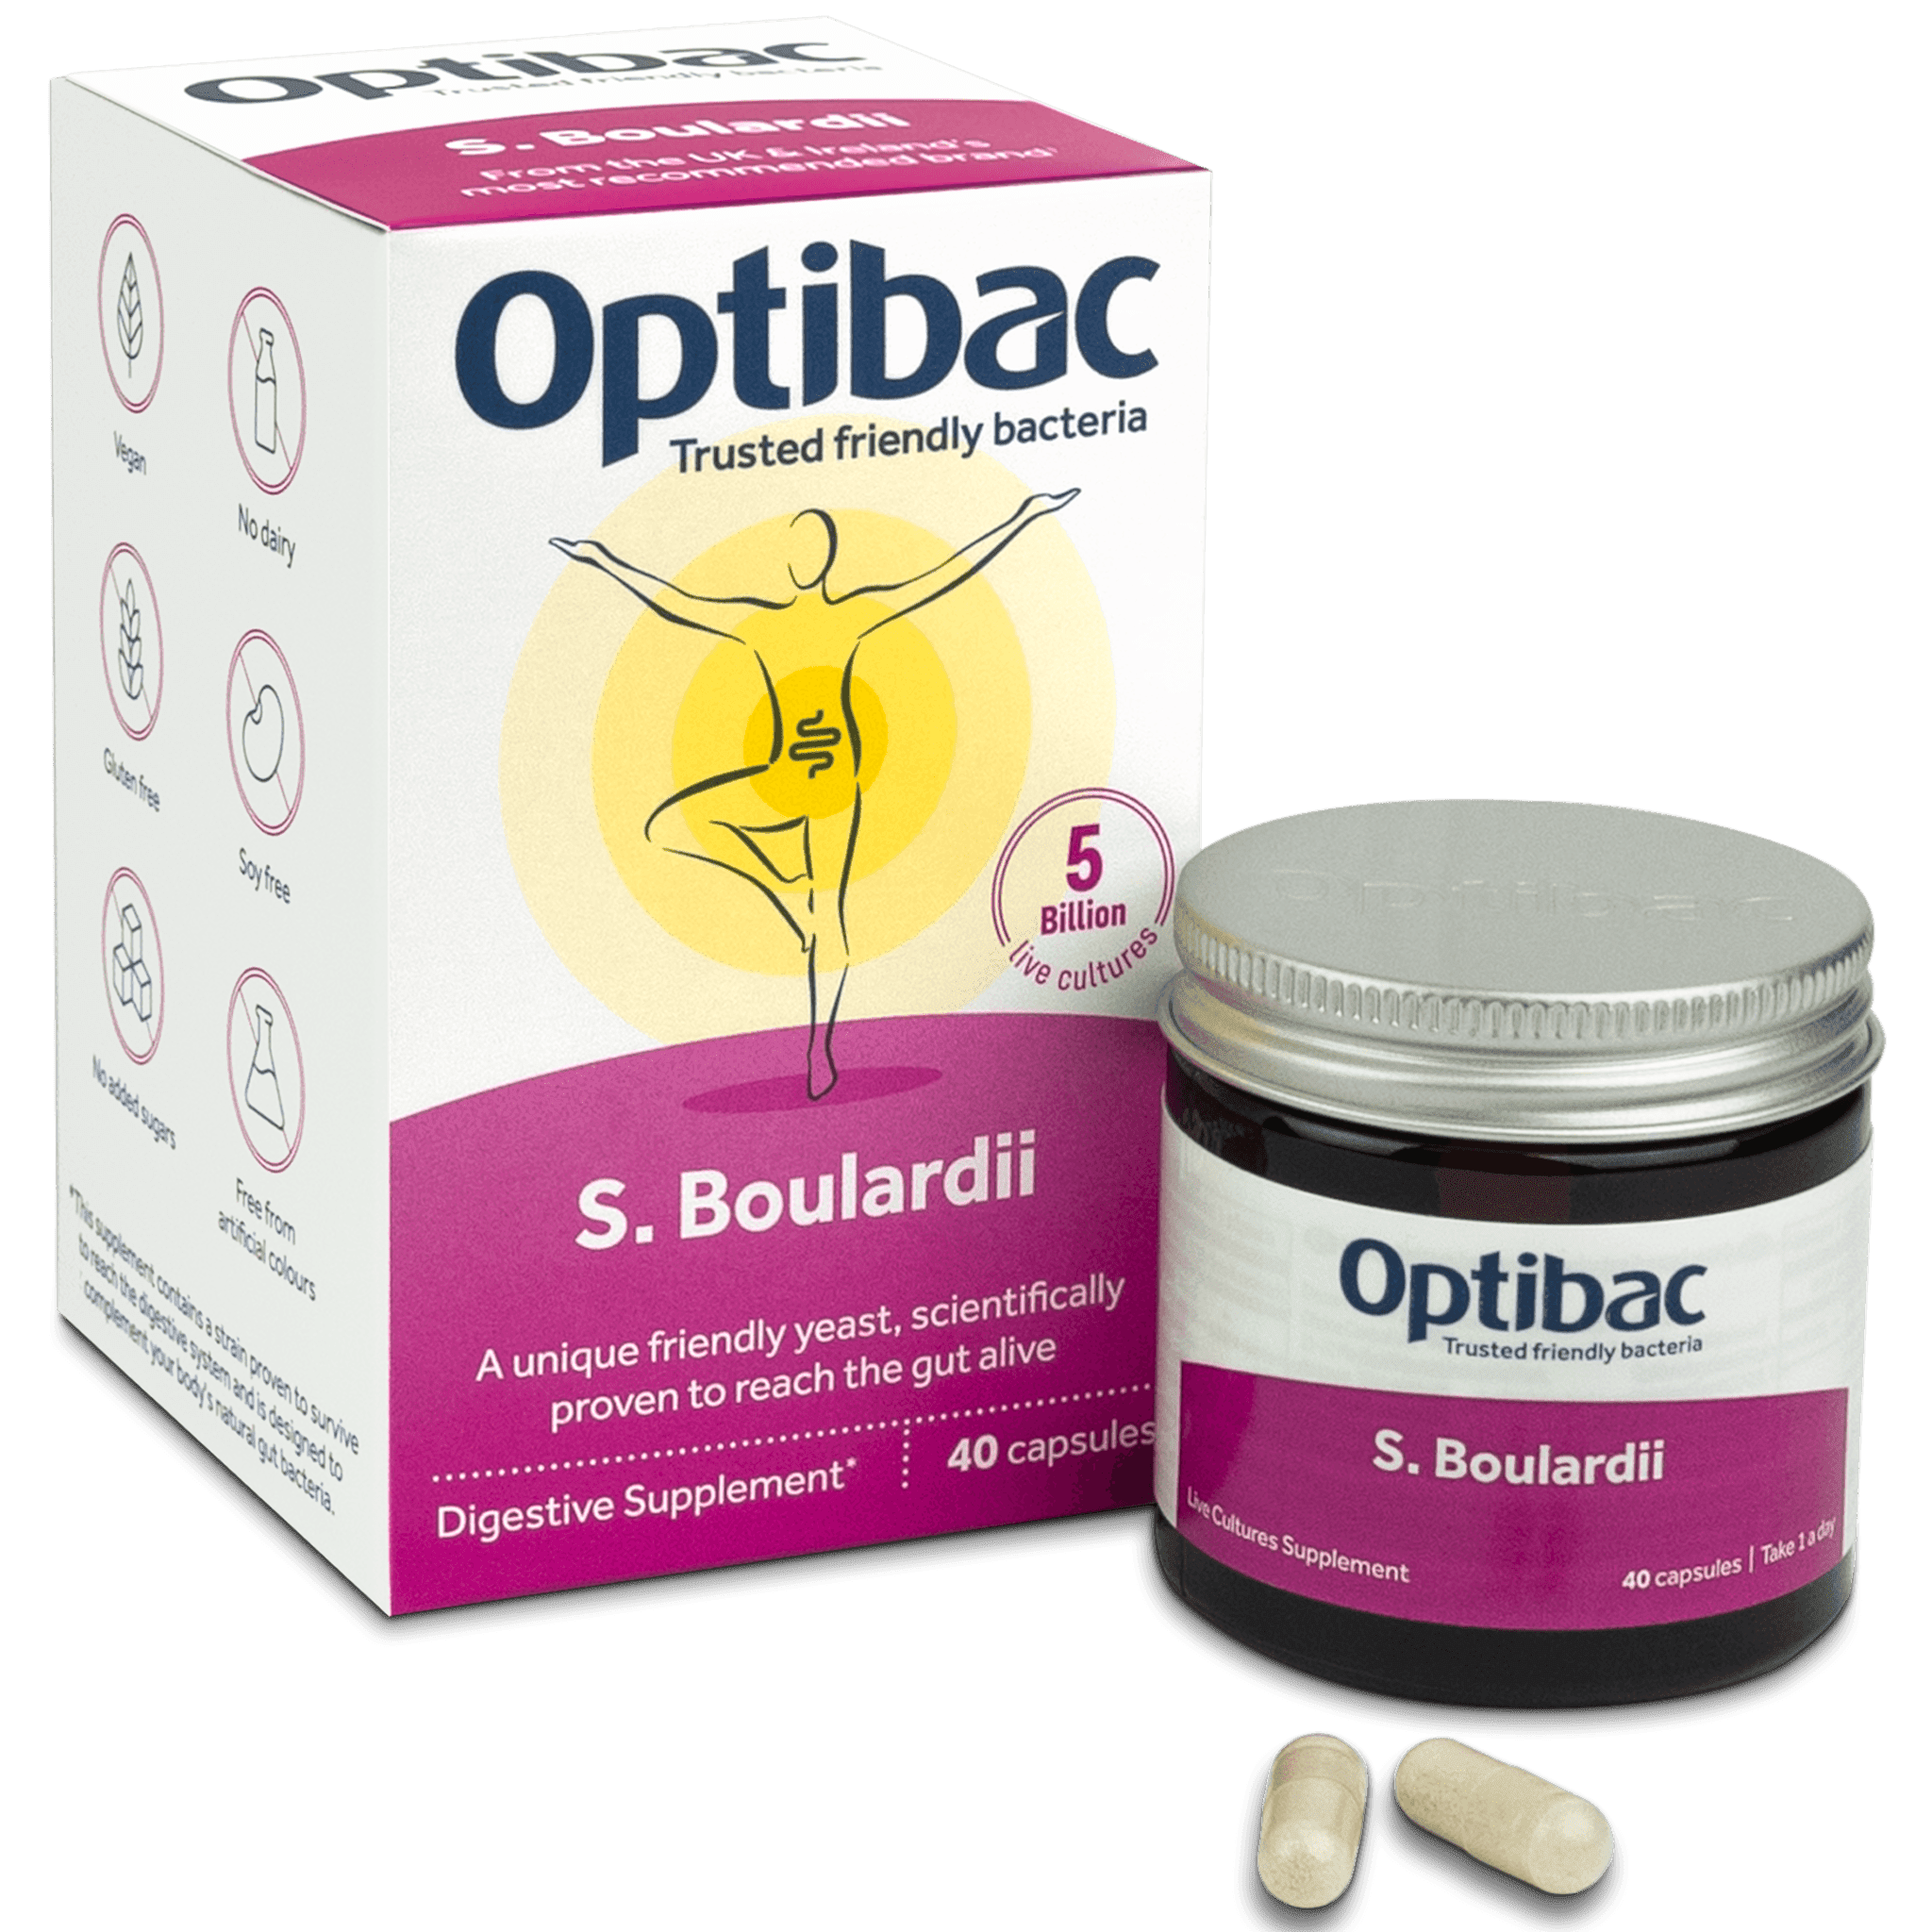 Optibac Probiotics Saccharomyces boulardii (40 capsules) pack contents